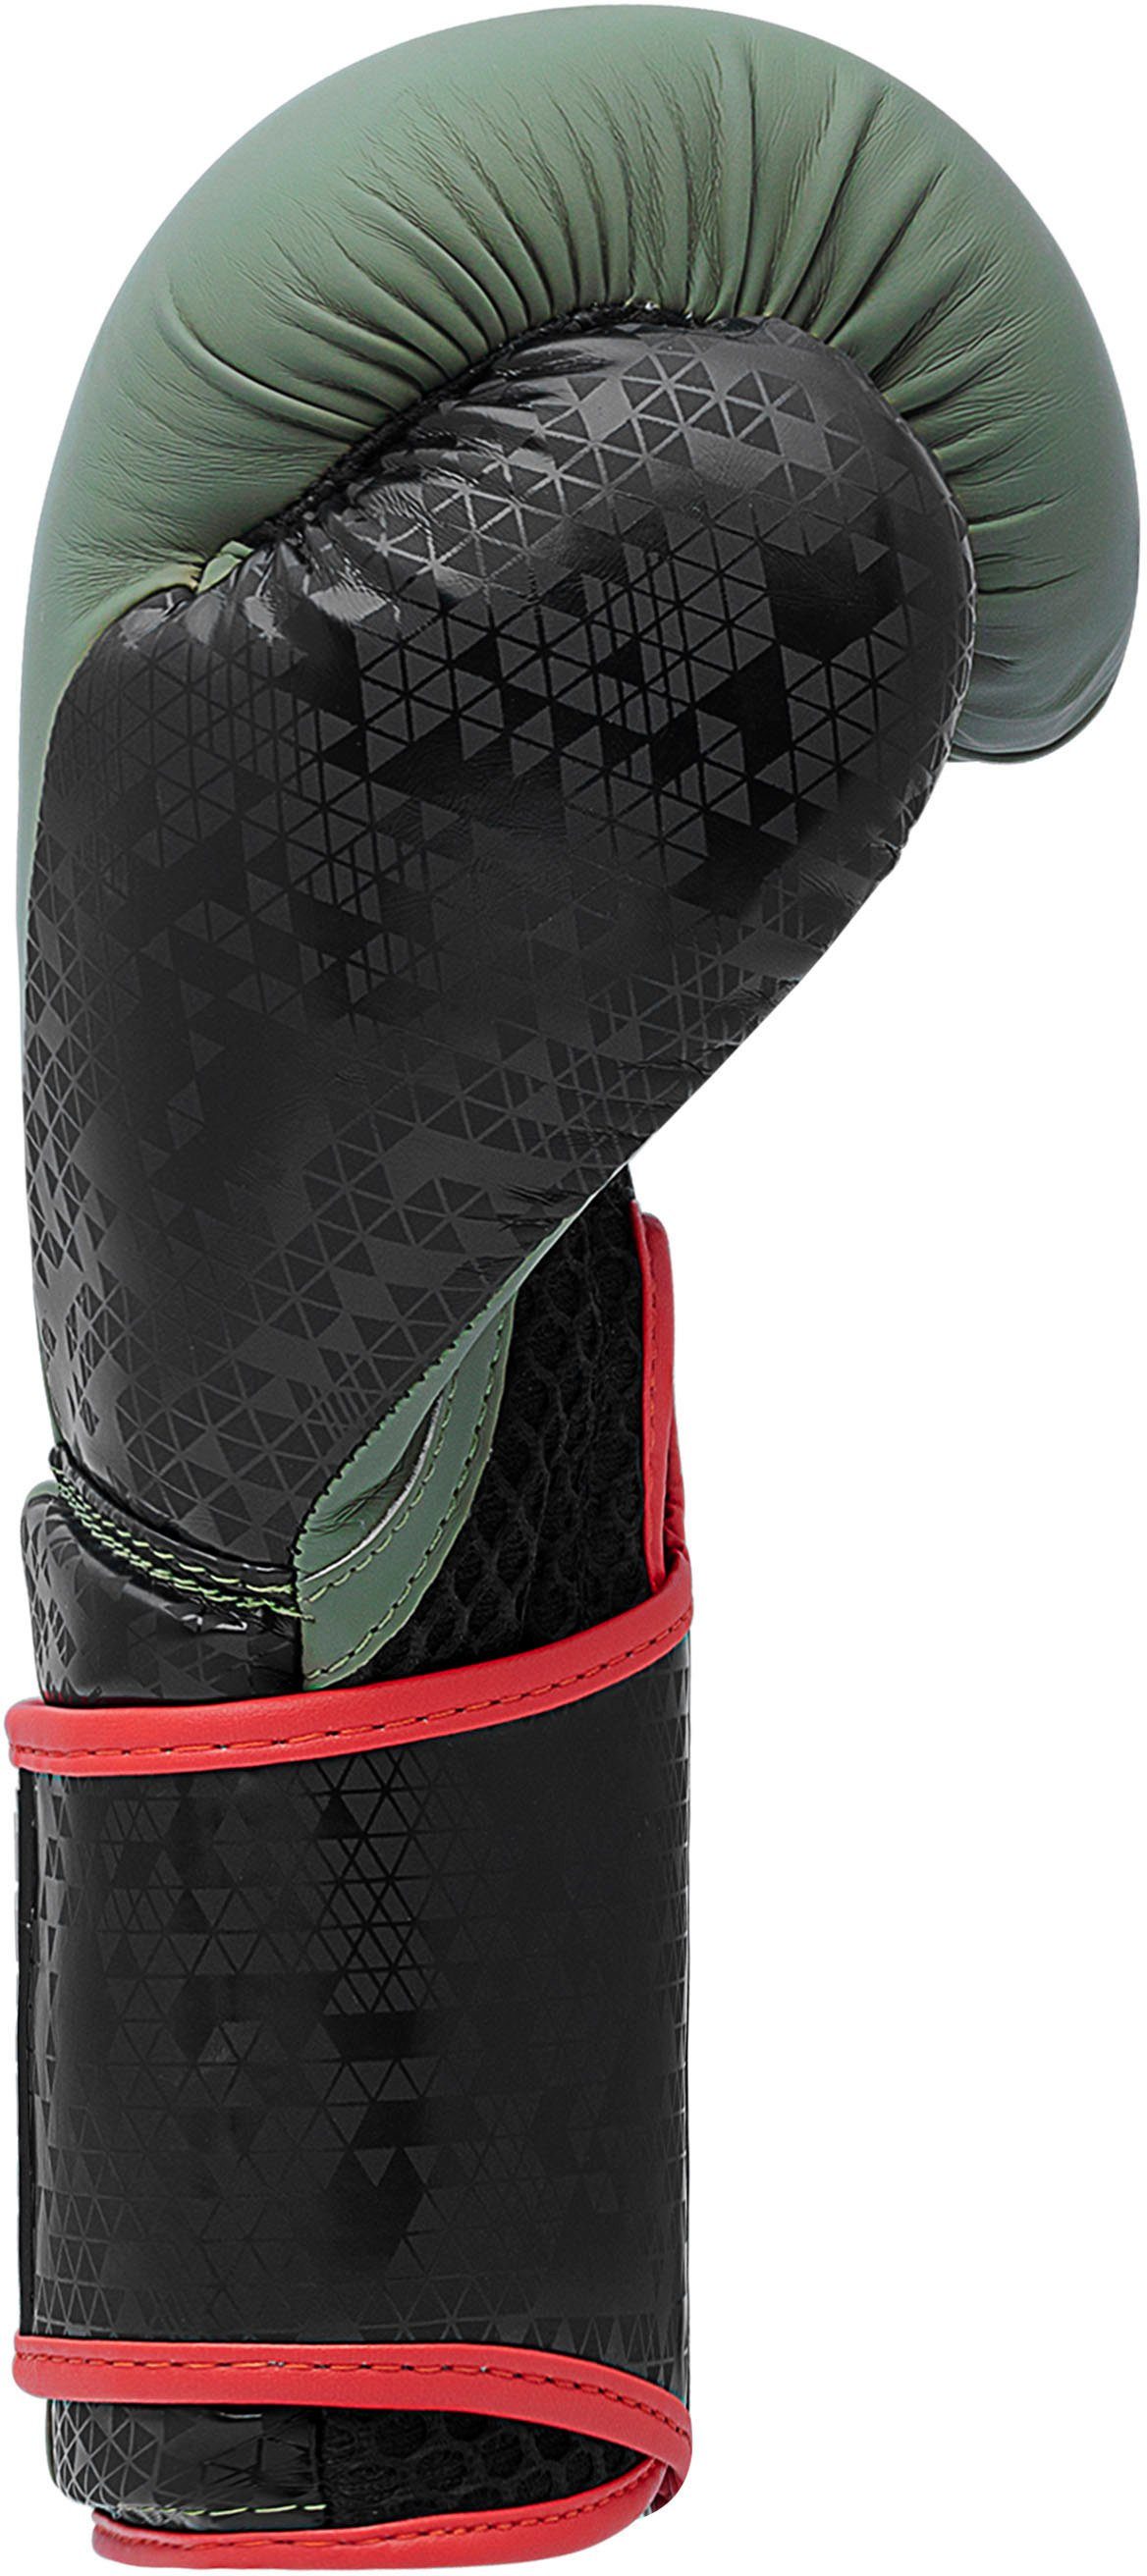 olivgrün/schwarz Combat Performance adidas Boxhandschuhe 50